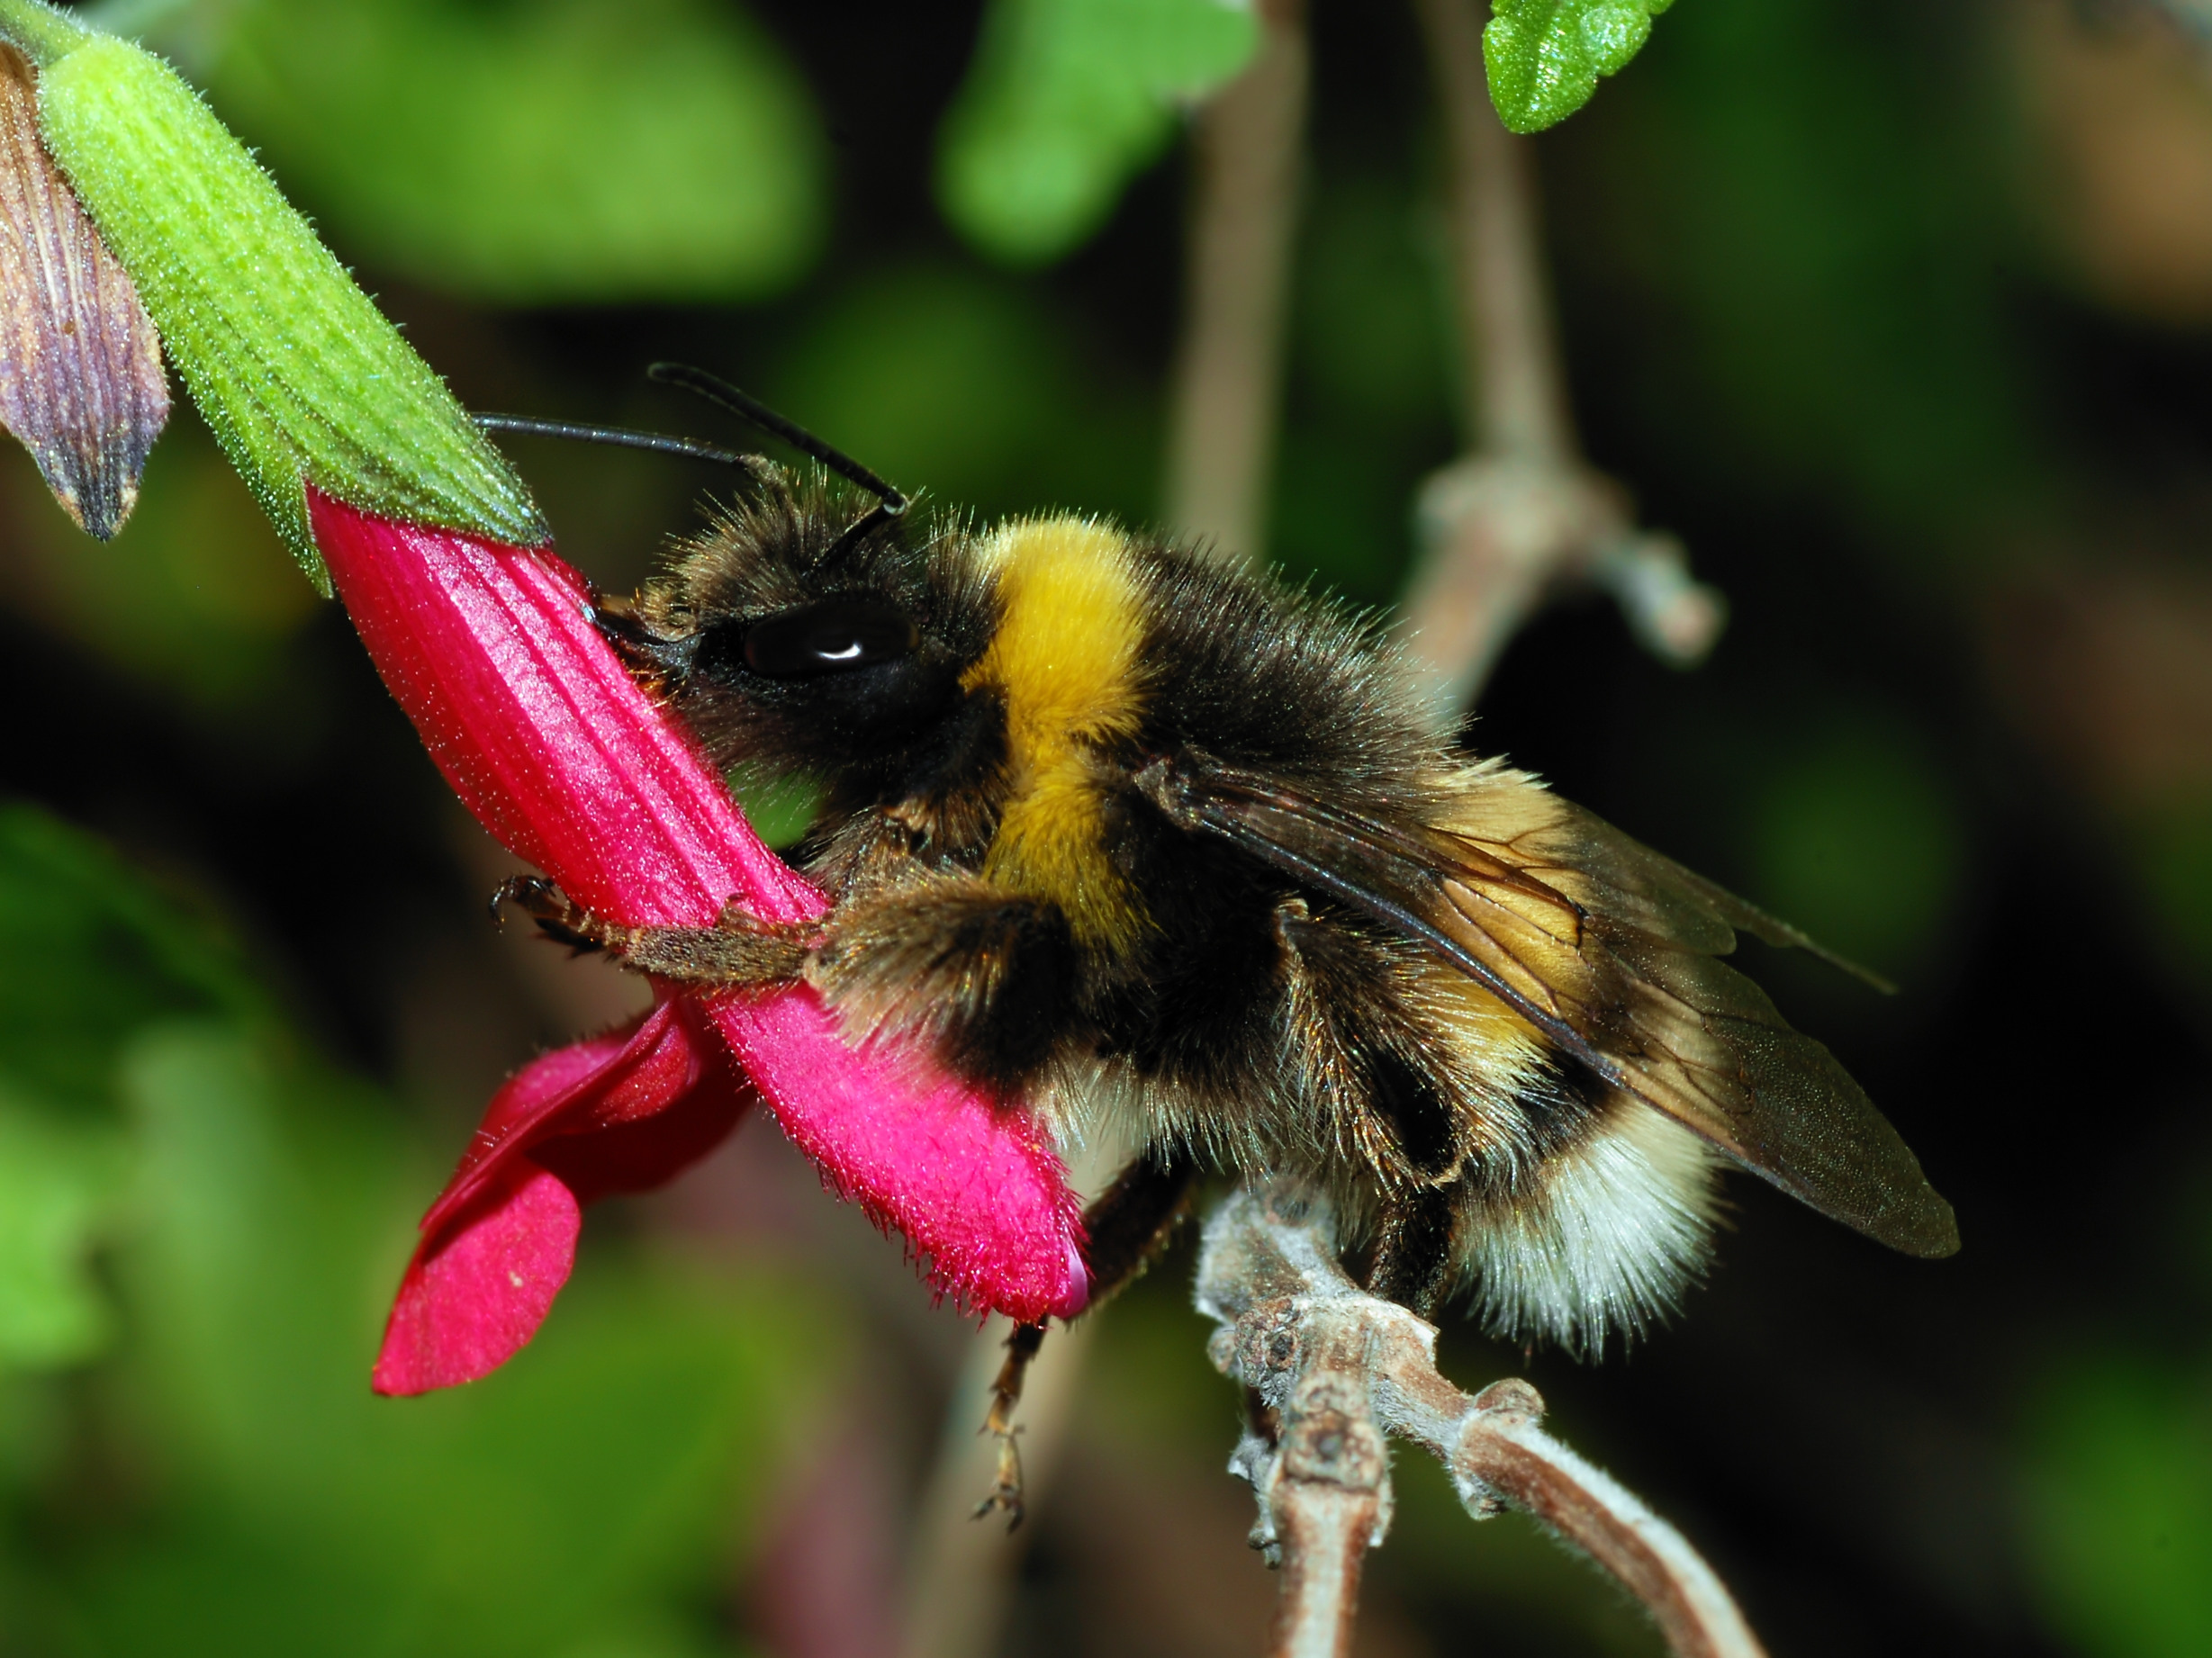 File:Bumblebee October 2007-3a.jpg - Wikipedia, the free encyclopedia